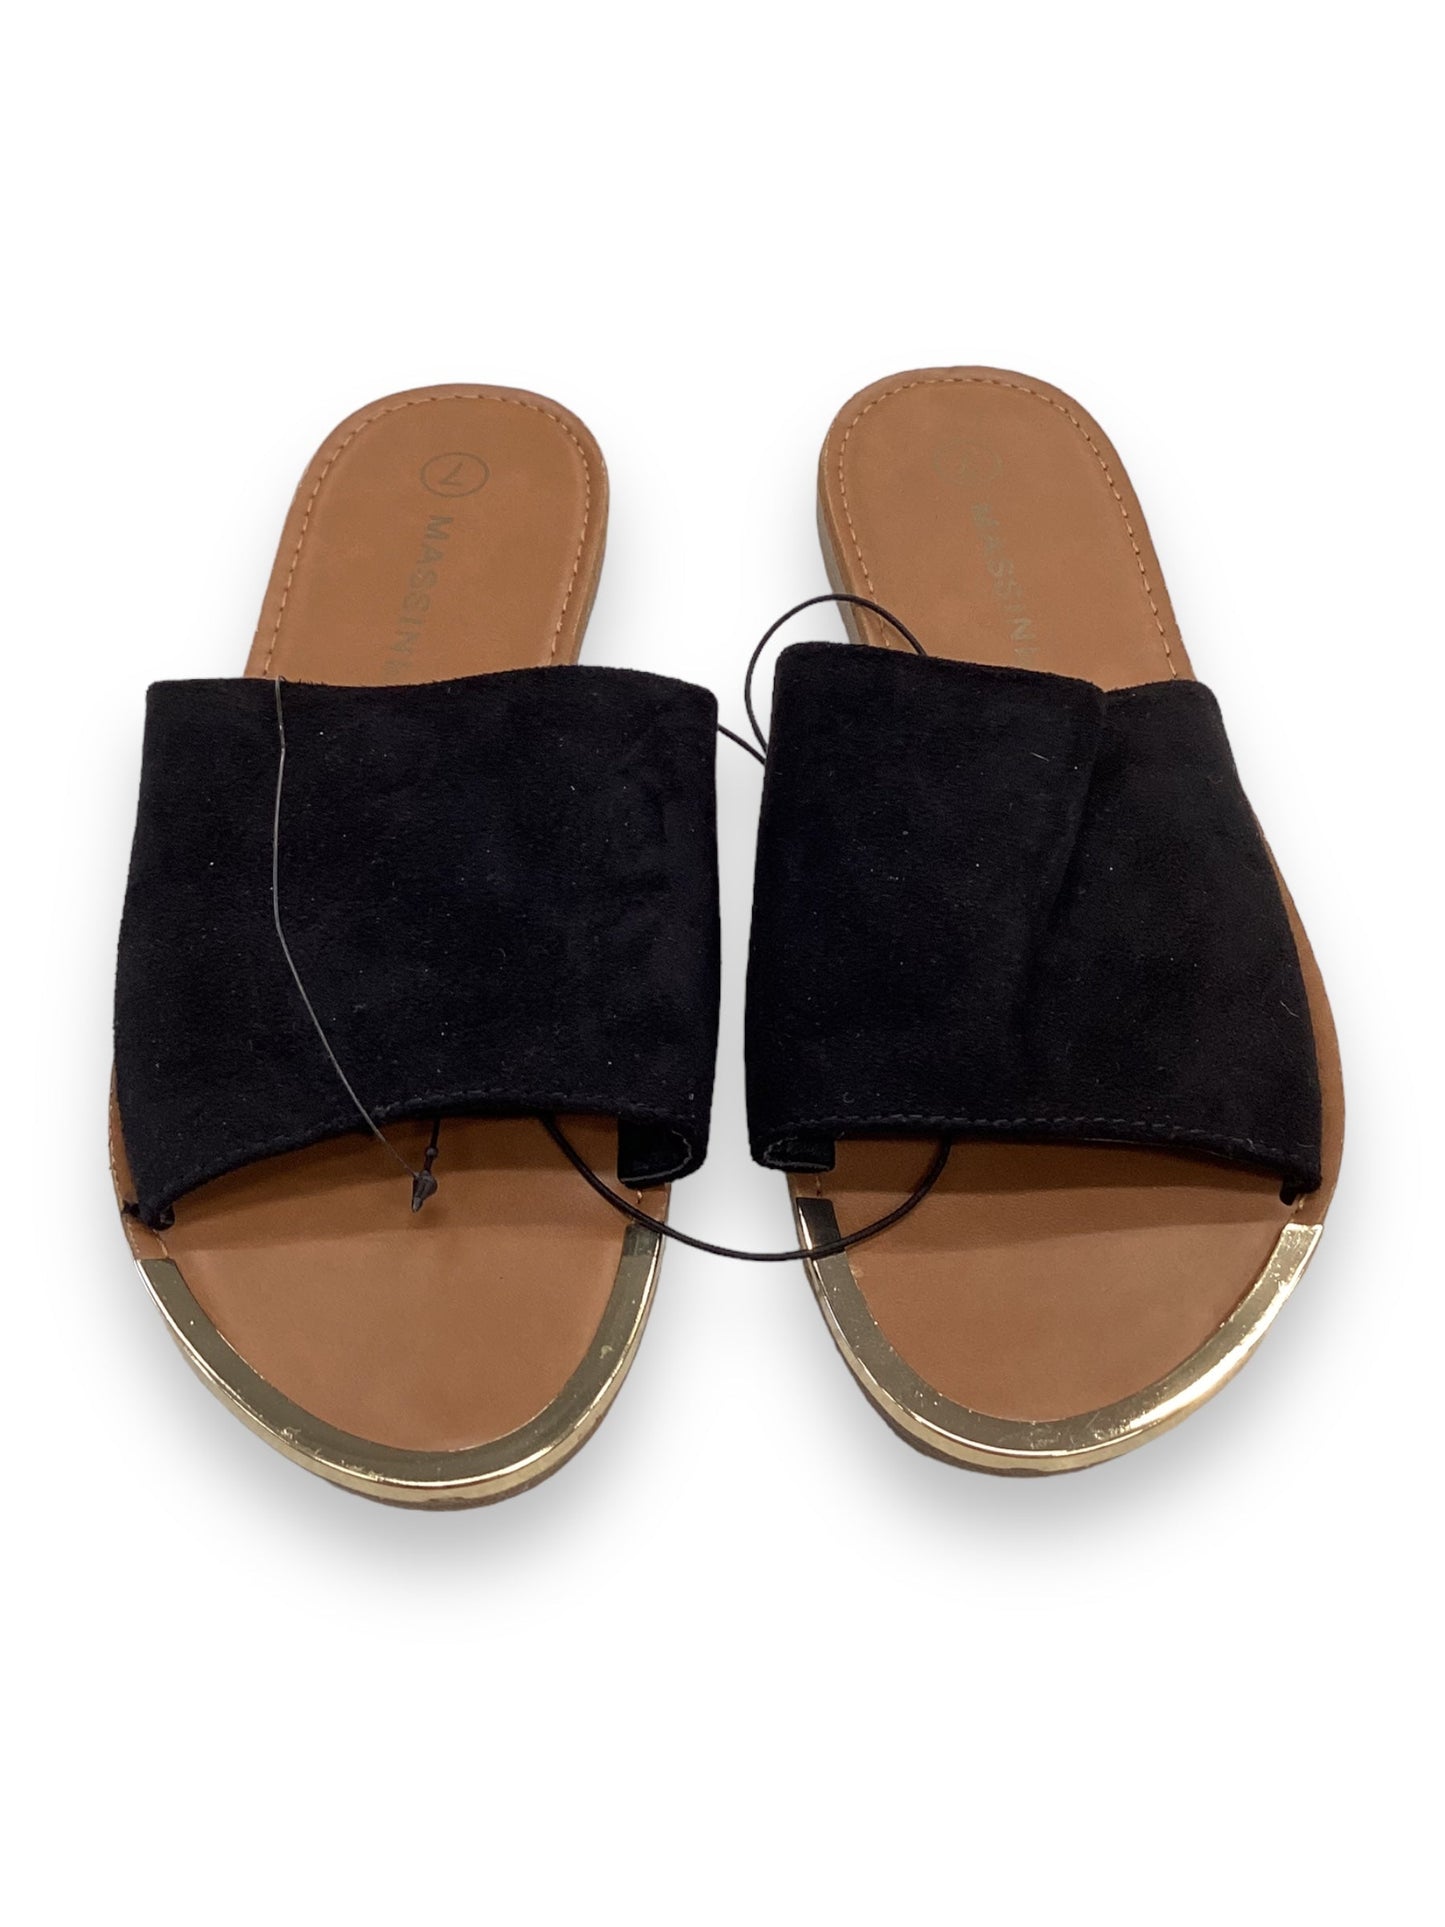 Sandals Flats By Massini  Size: 7